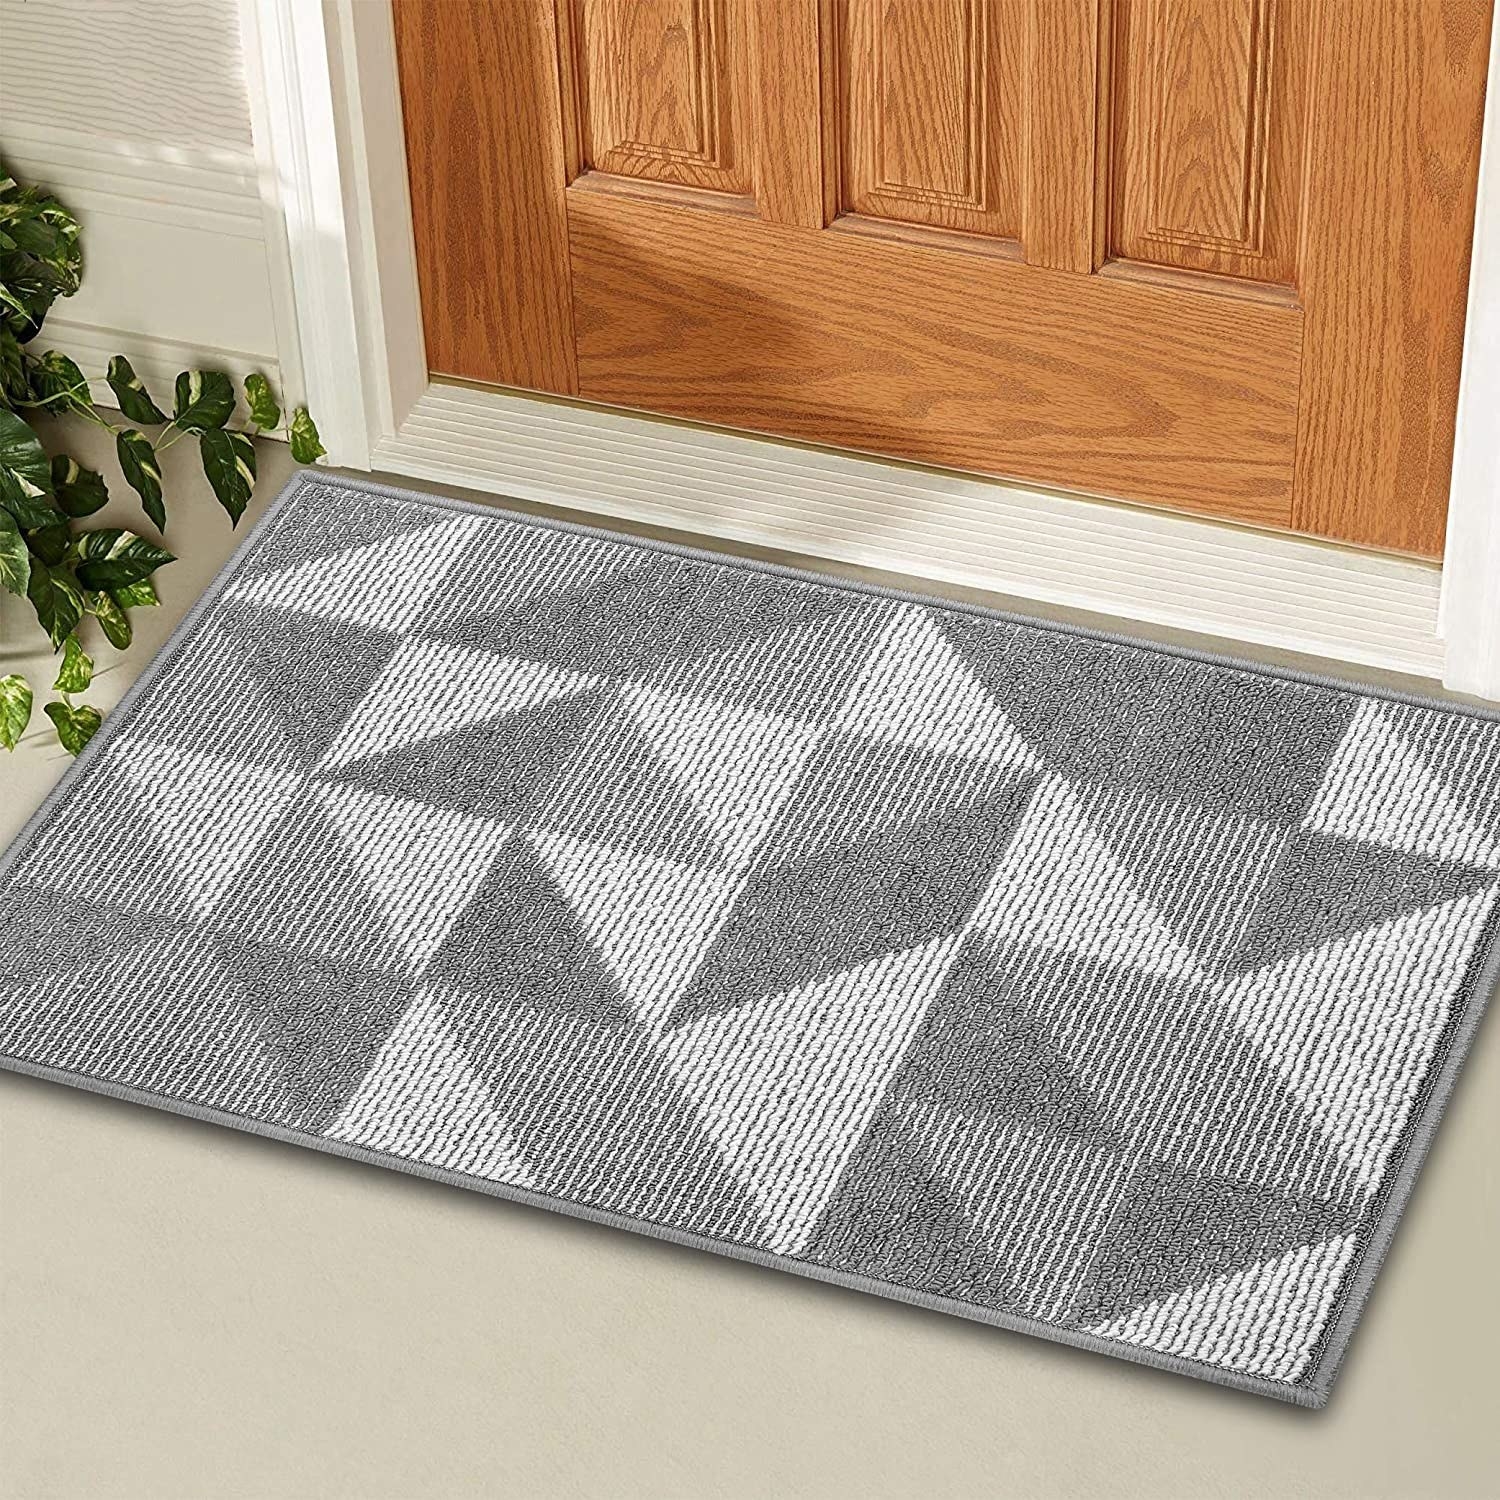 inside door with gray geometric print mat